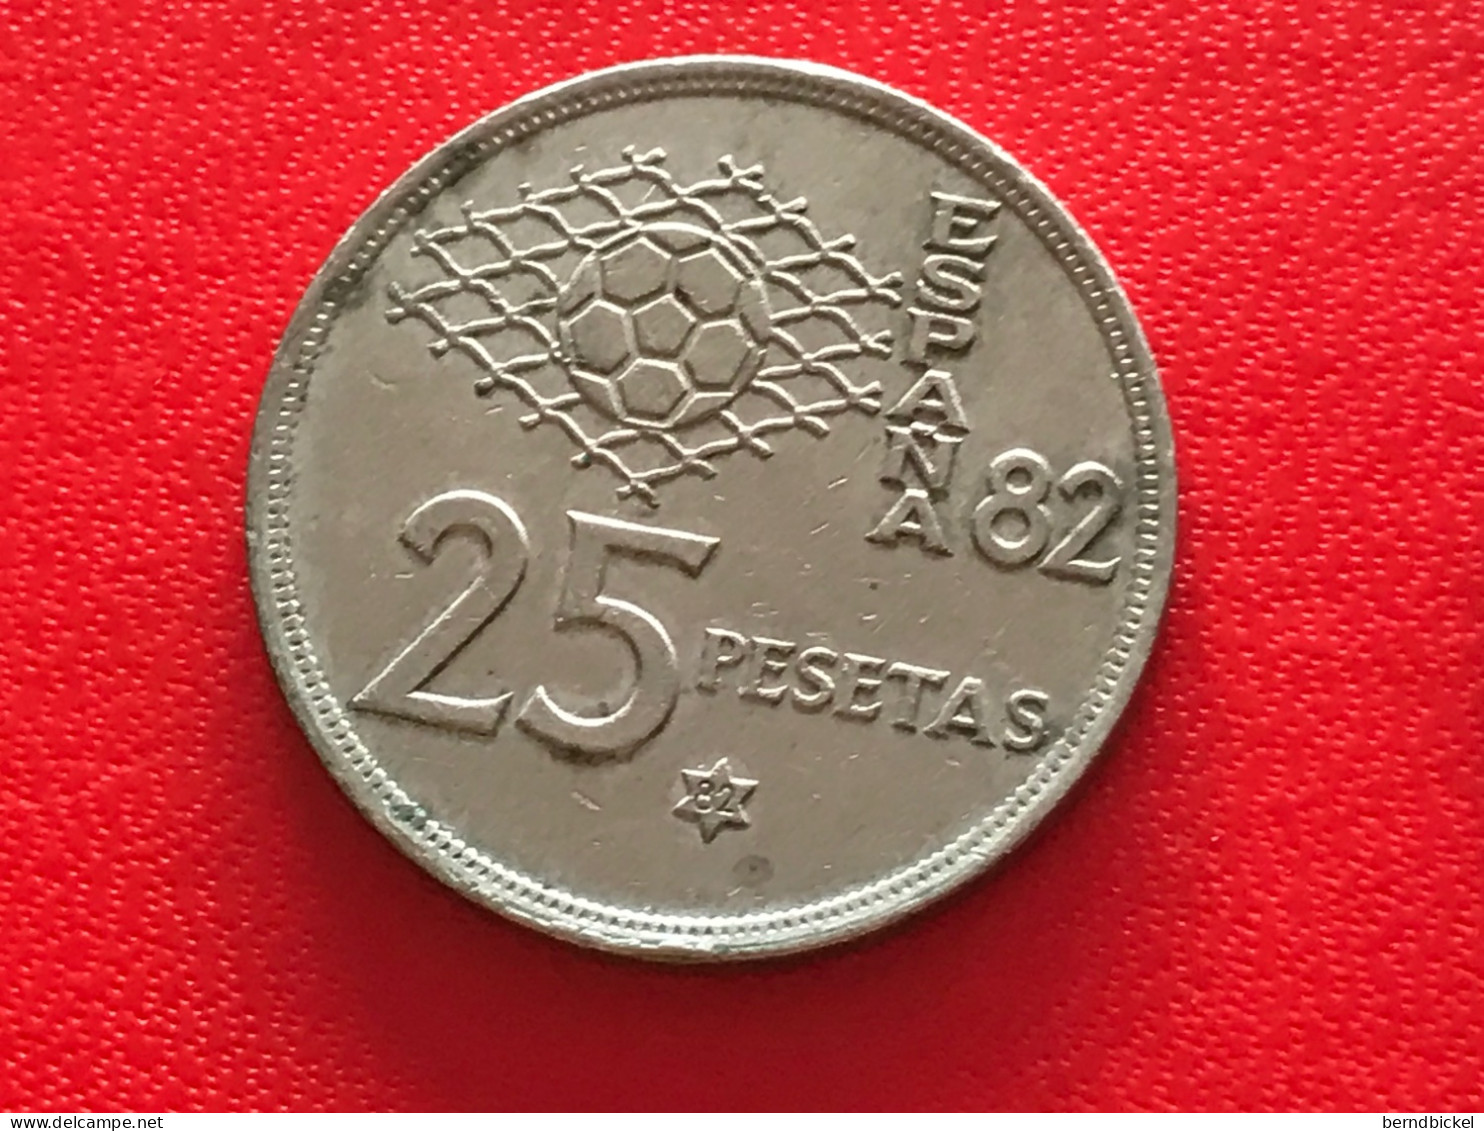 Münze Münzen Umlaufmünze Spanien 25 Pesetas 1980 Im Stern 82 - 25 Peseta